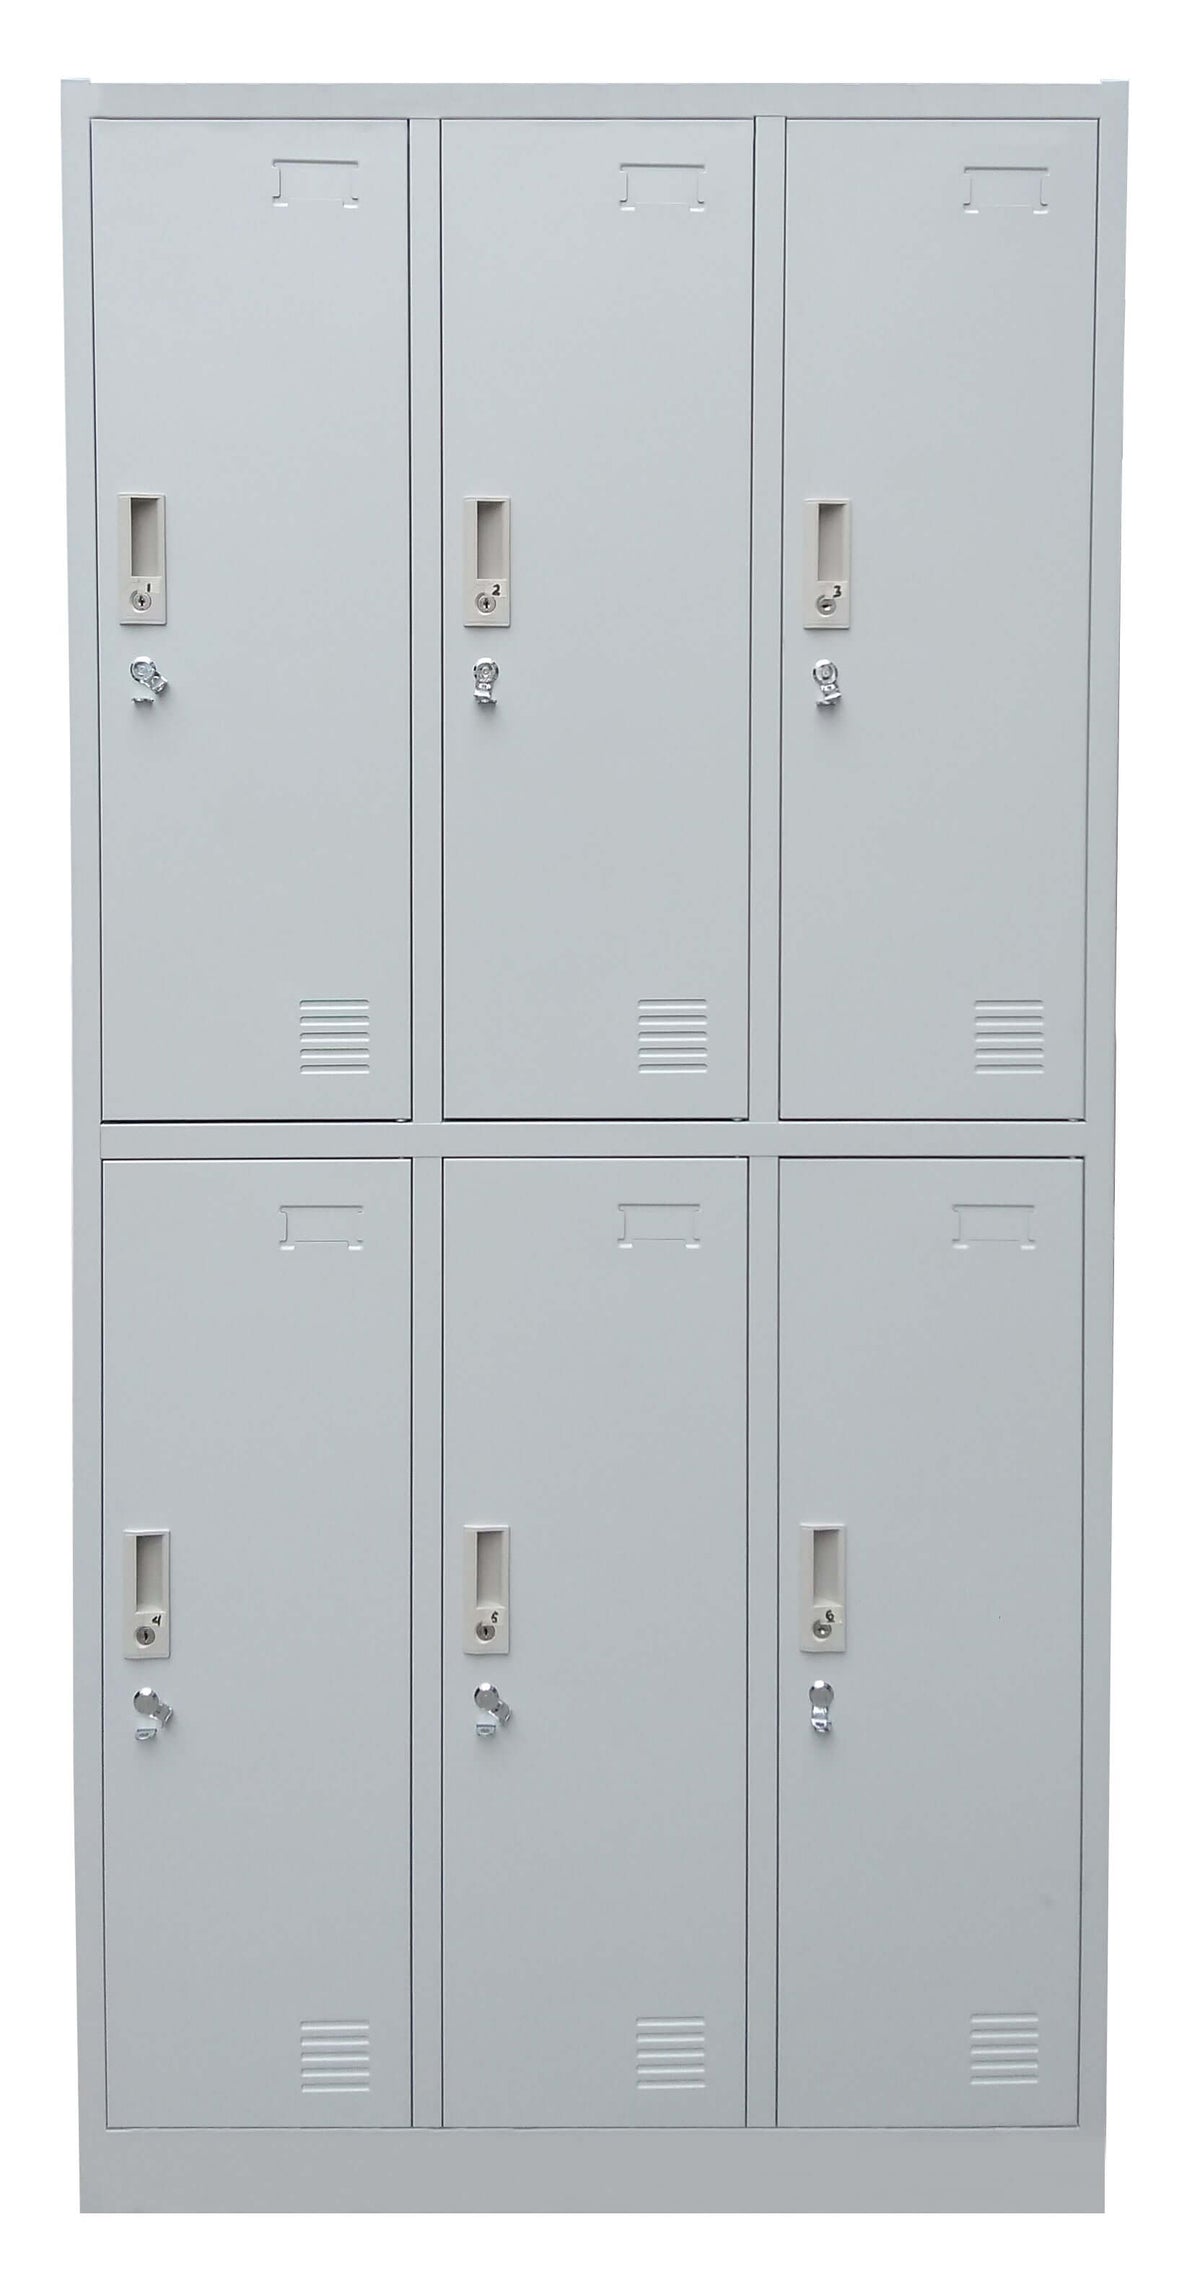 6 Door Steel Locker Hasp DL-0645 and Name Plate, with Cabinet Padlock